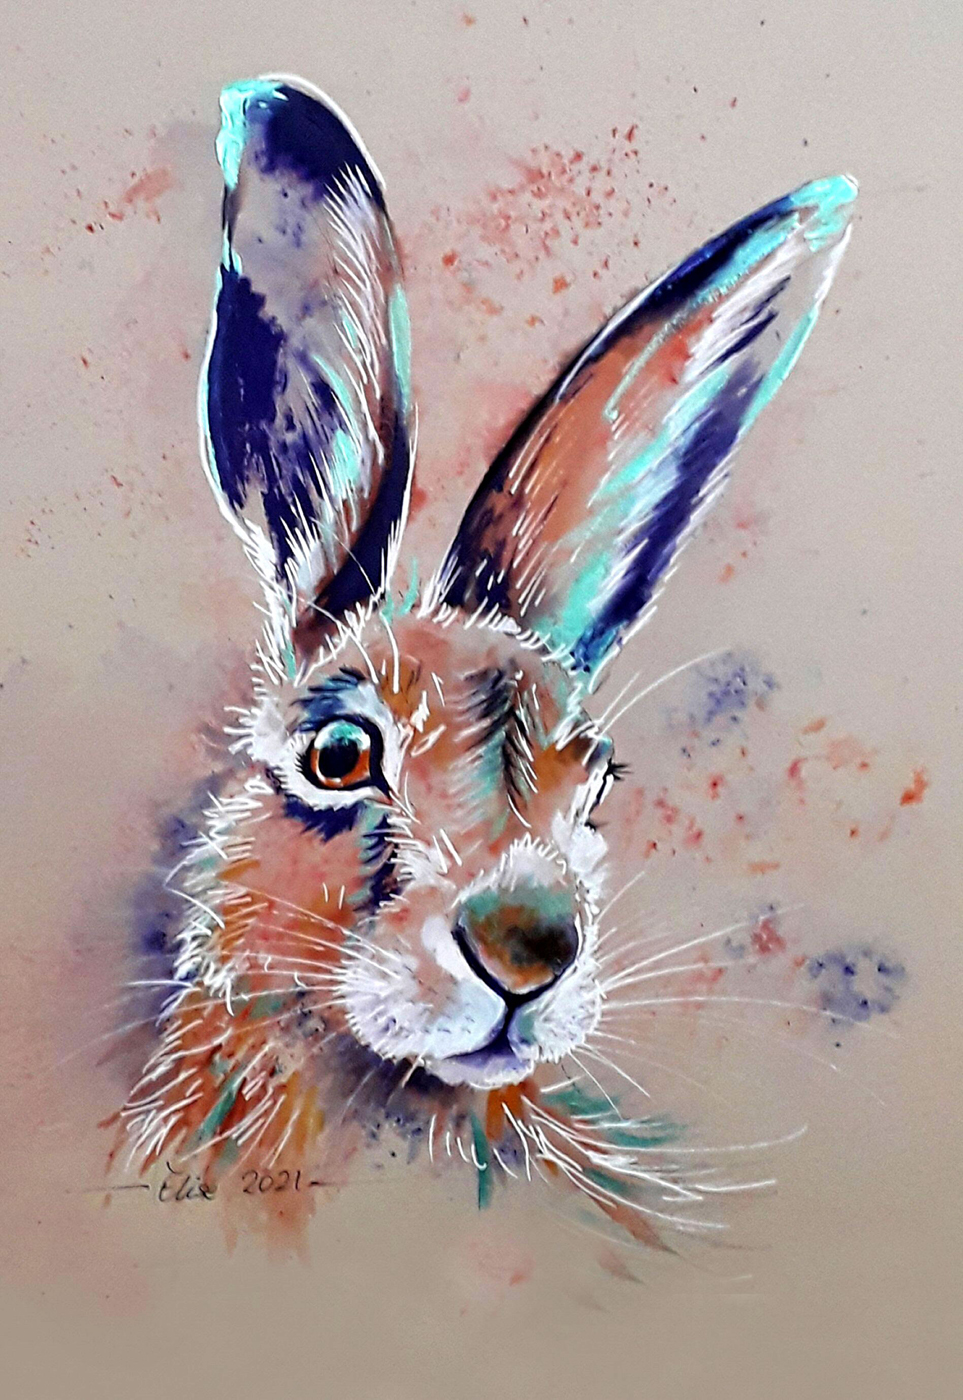 Hare Image